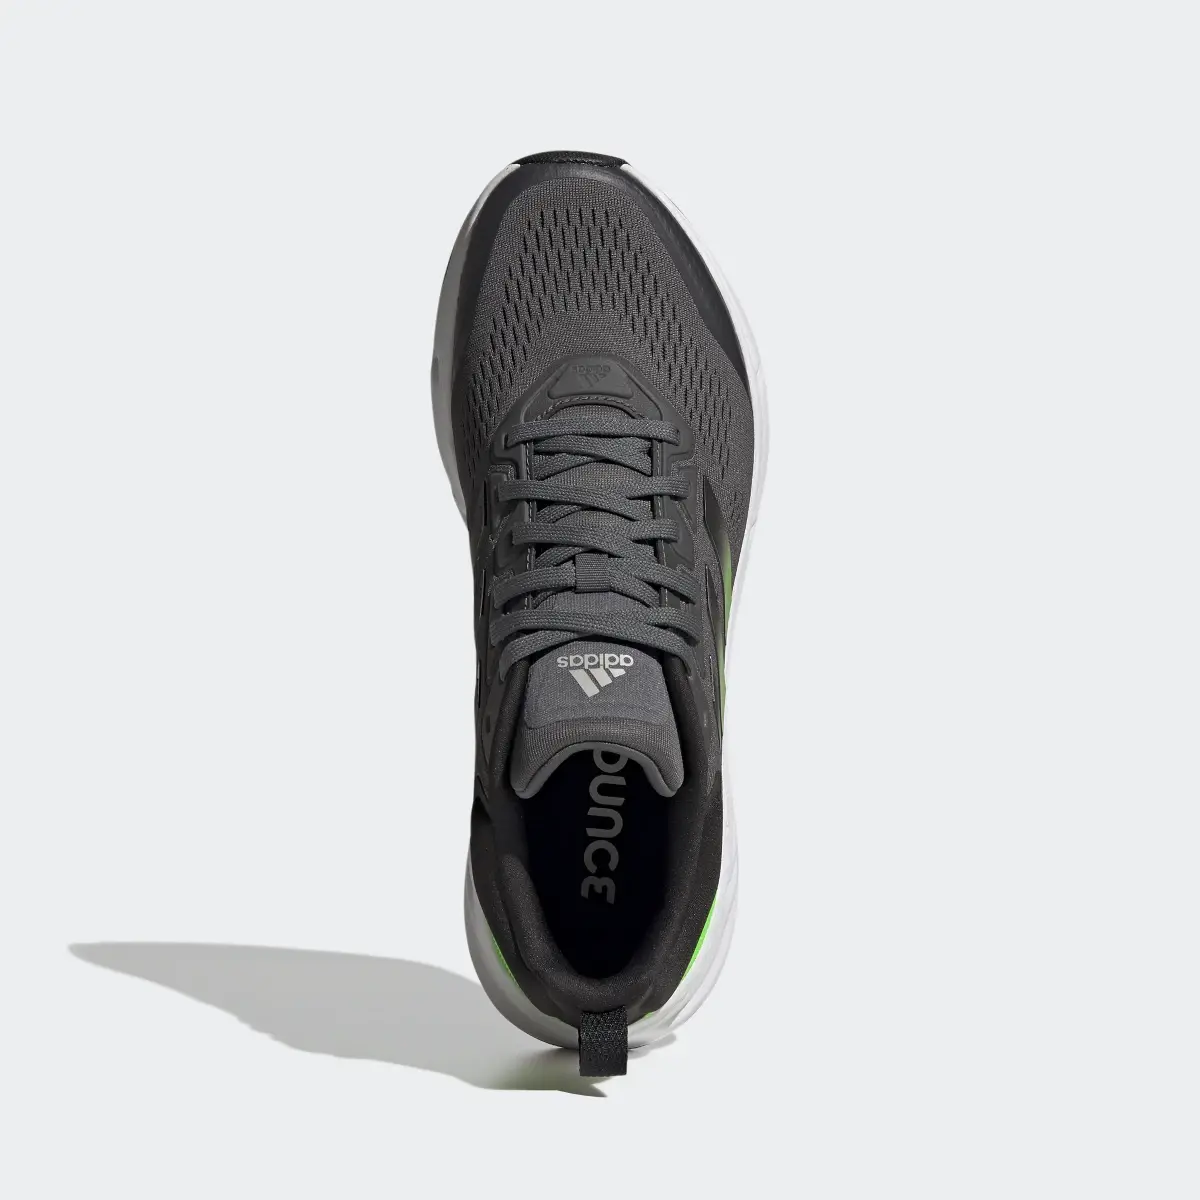 Adidas Questar Shoes. 3